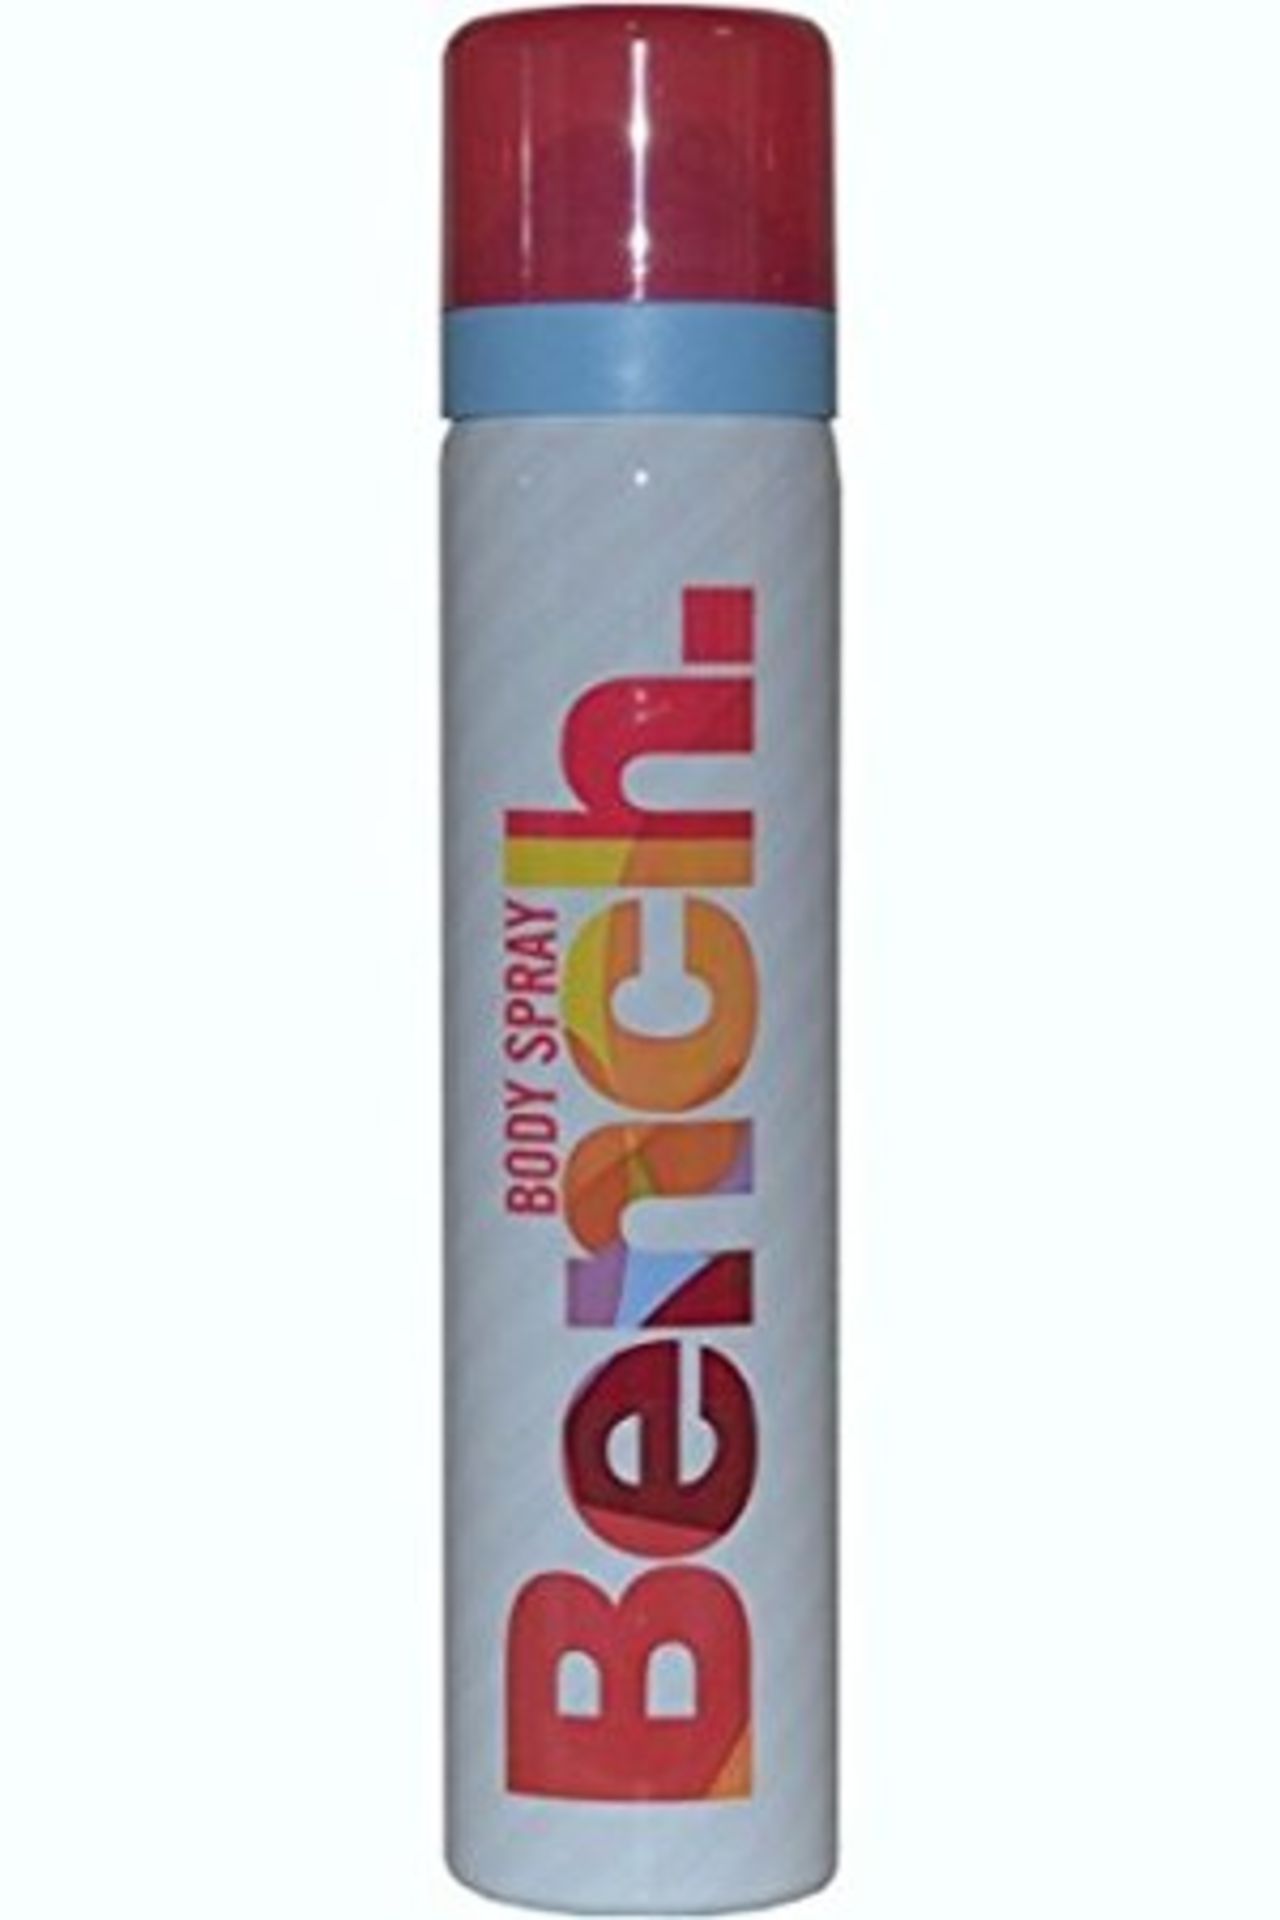 V Brand New Twelve Bench For Her Body Spray 75 ml. Tesco Direct price £49.44